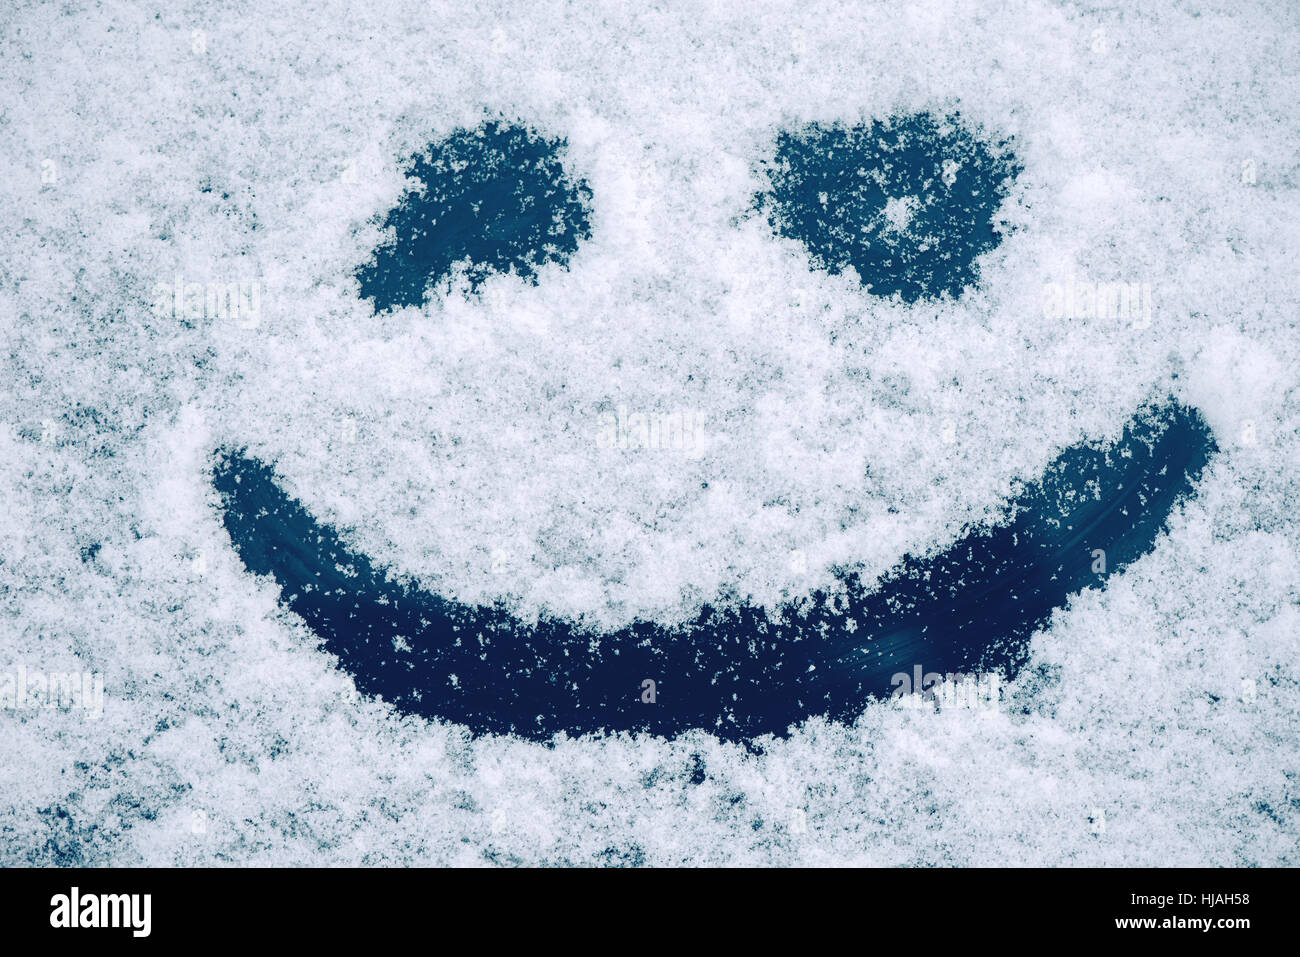 Happy smiley emoticon face in snow, winter season joy and happiness concept Stock Photo